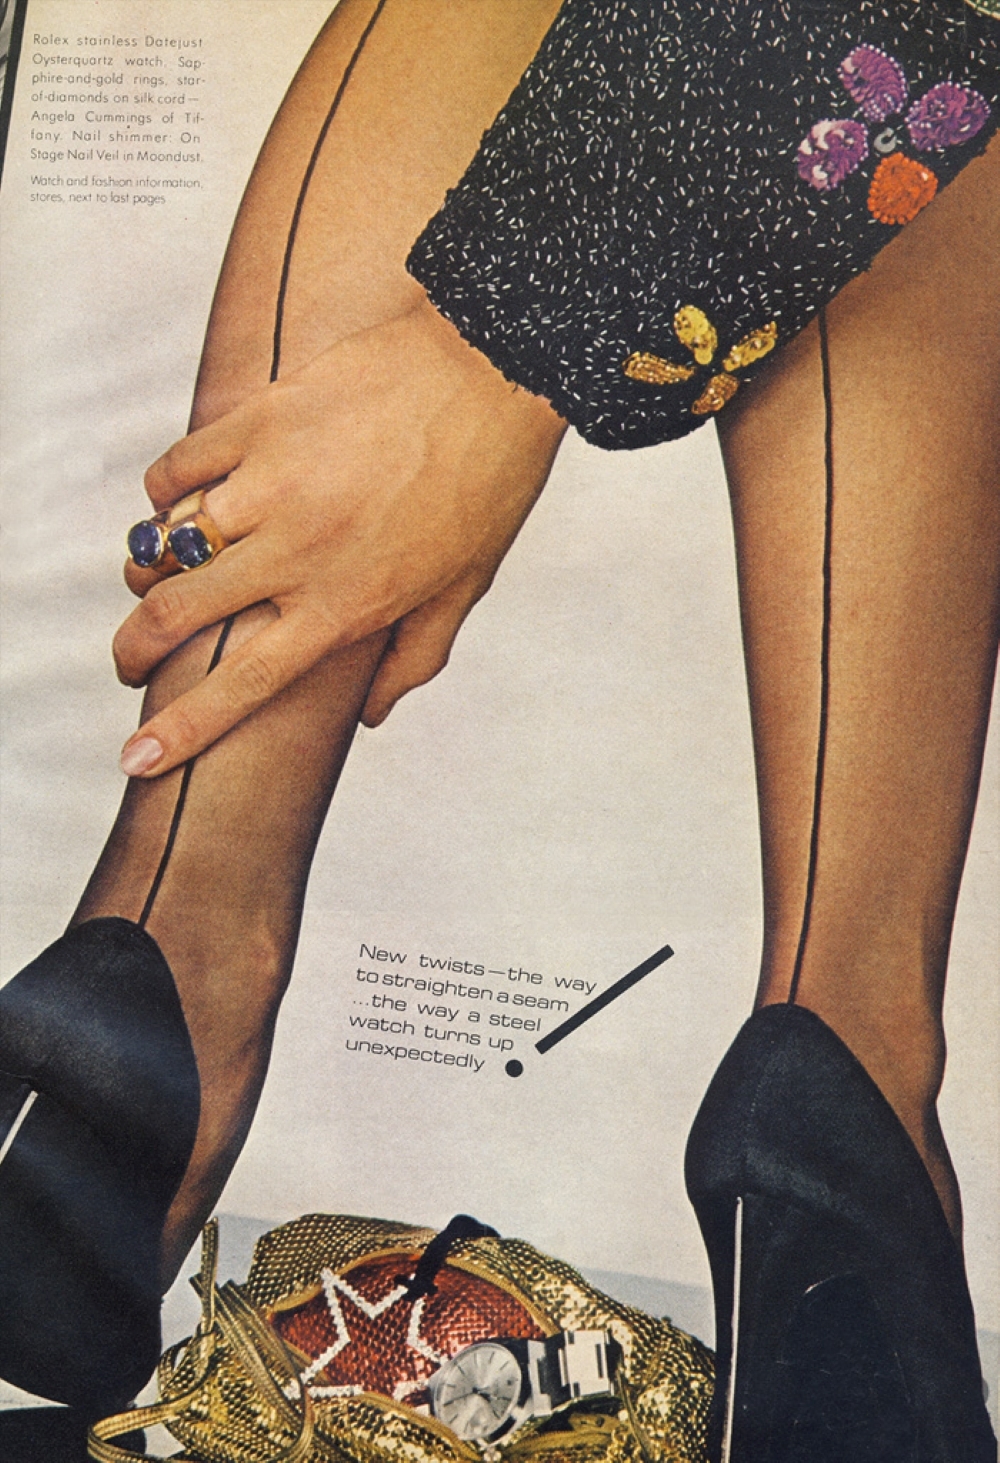 1978 November Vogue US.   Present Perfect ~ Gia Carangi by Albert Watson photographer.  John Sahag hair, George Newell makeup.  Merchandise by photographer Nobu.